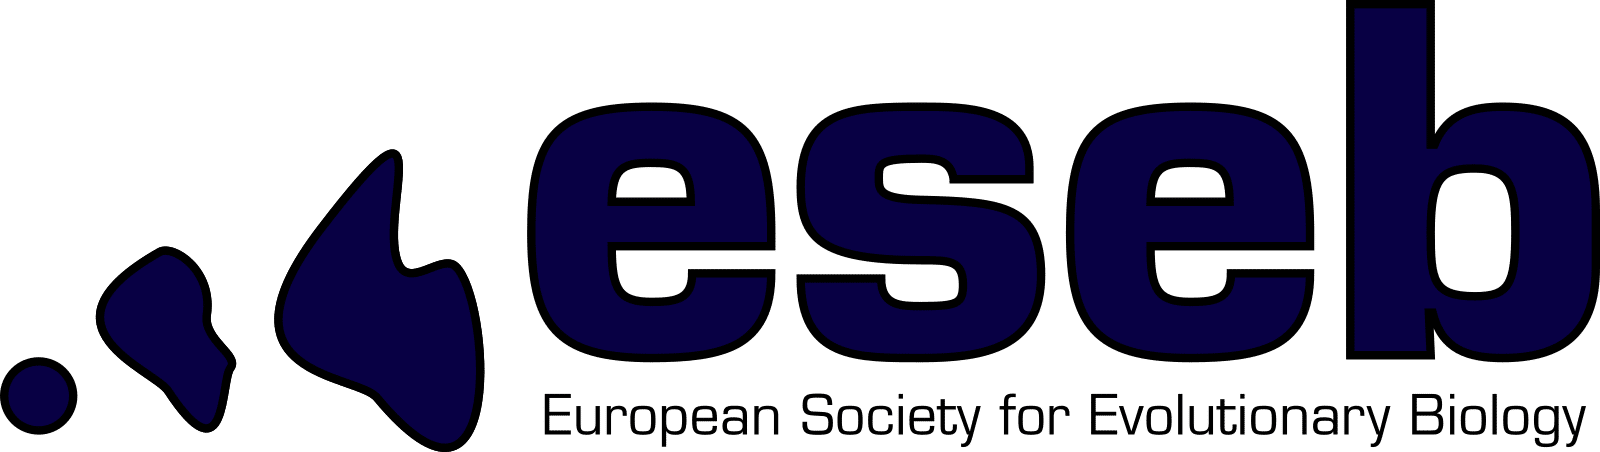 ESEB Logo